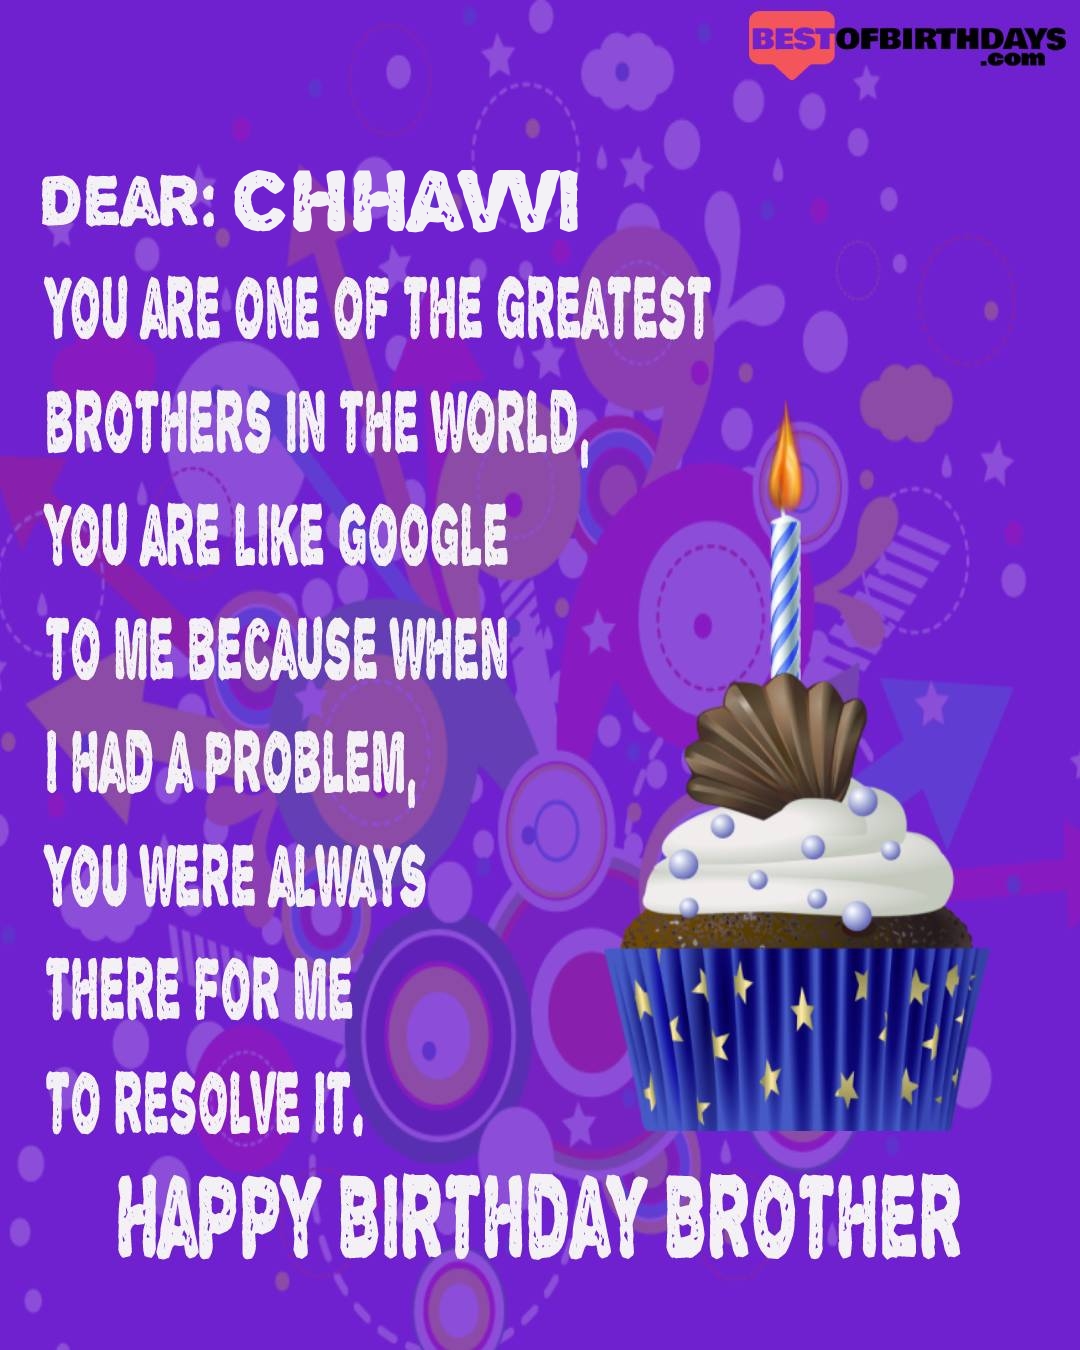 Happy birthday chhavvi bhai brother bro